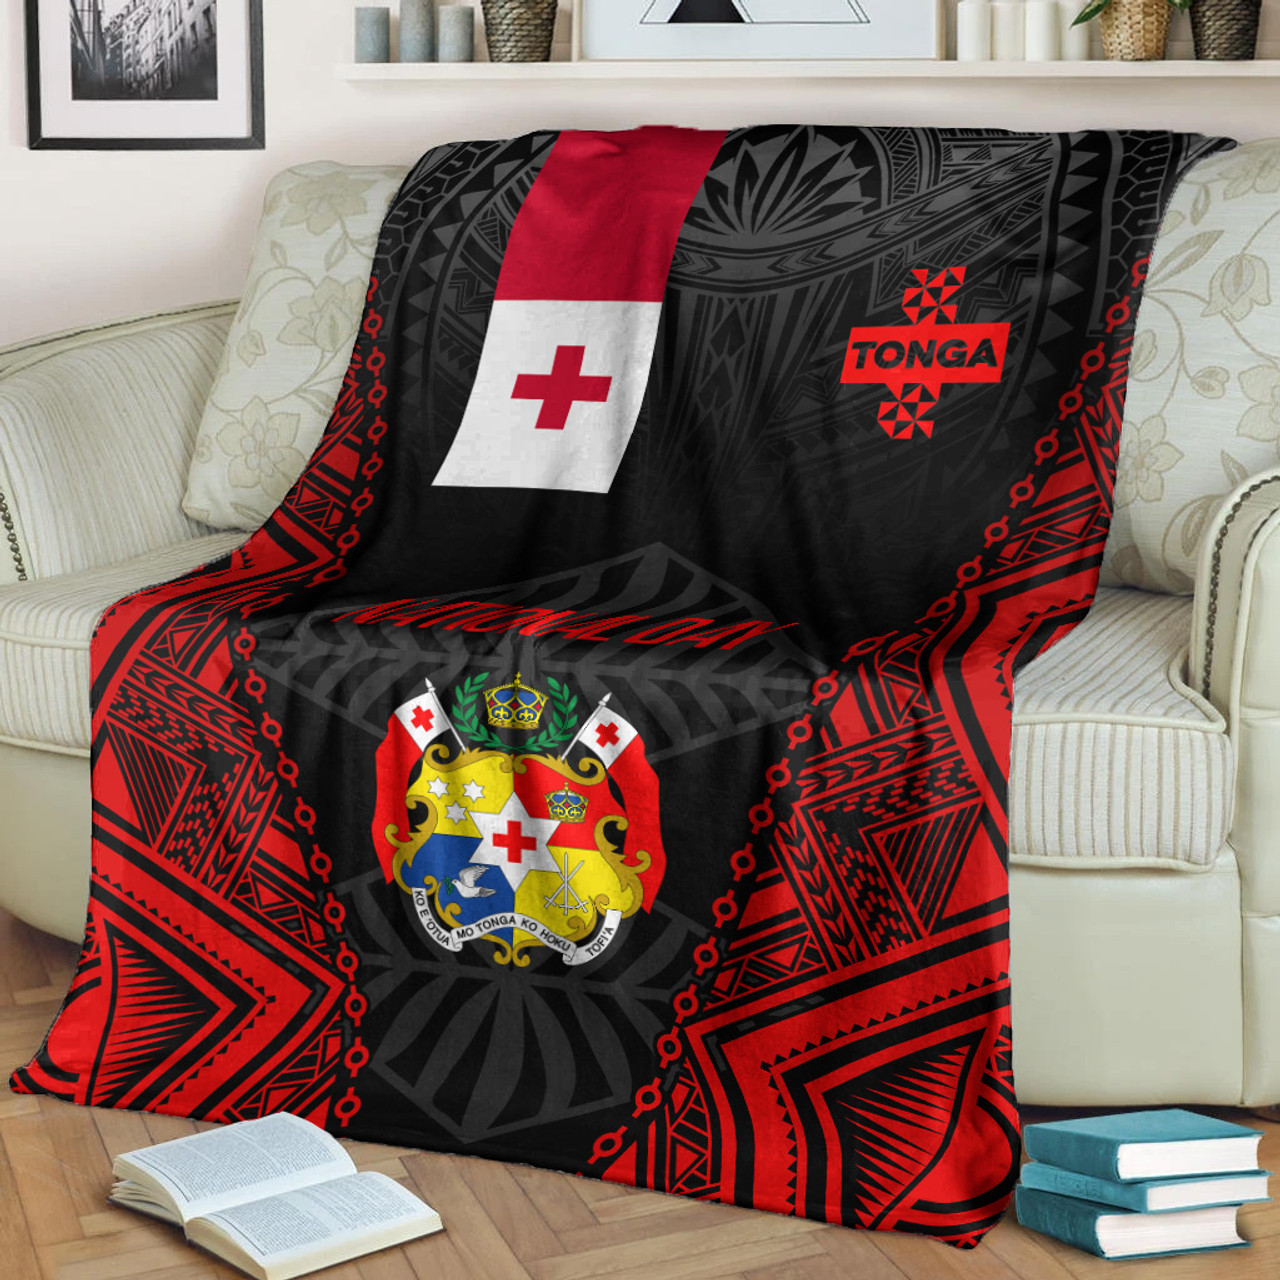 Tonga Premium Blanket - National Day Tonga Polynesian